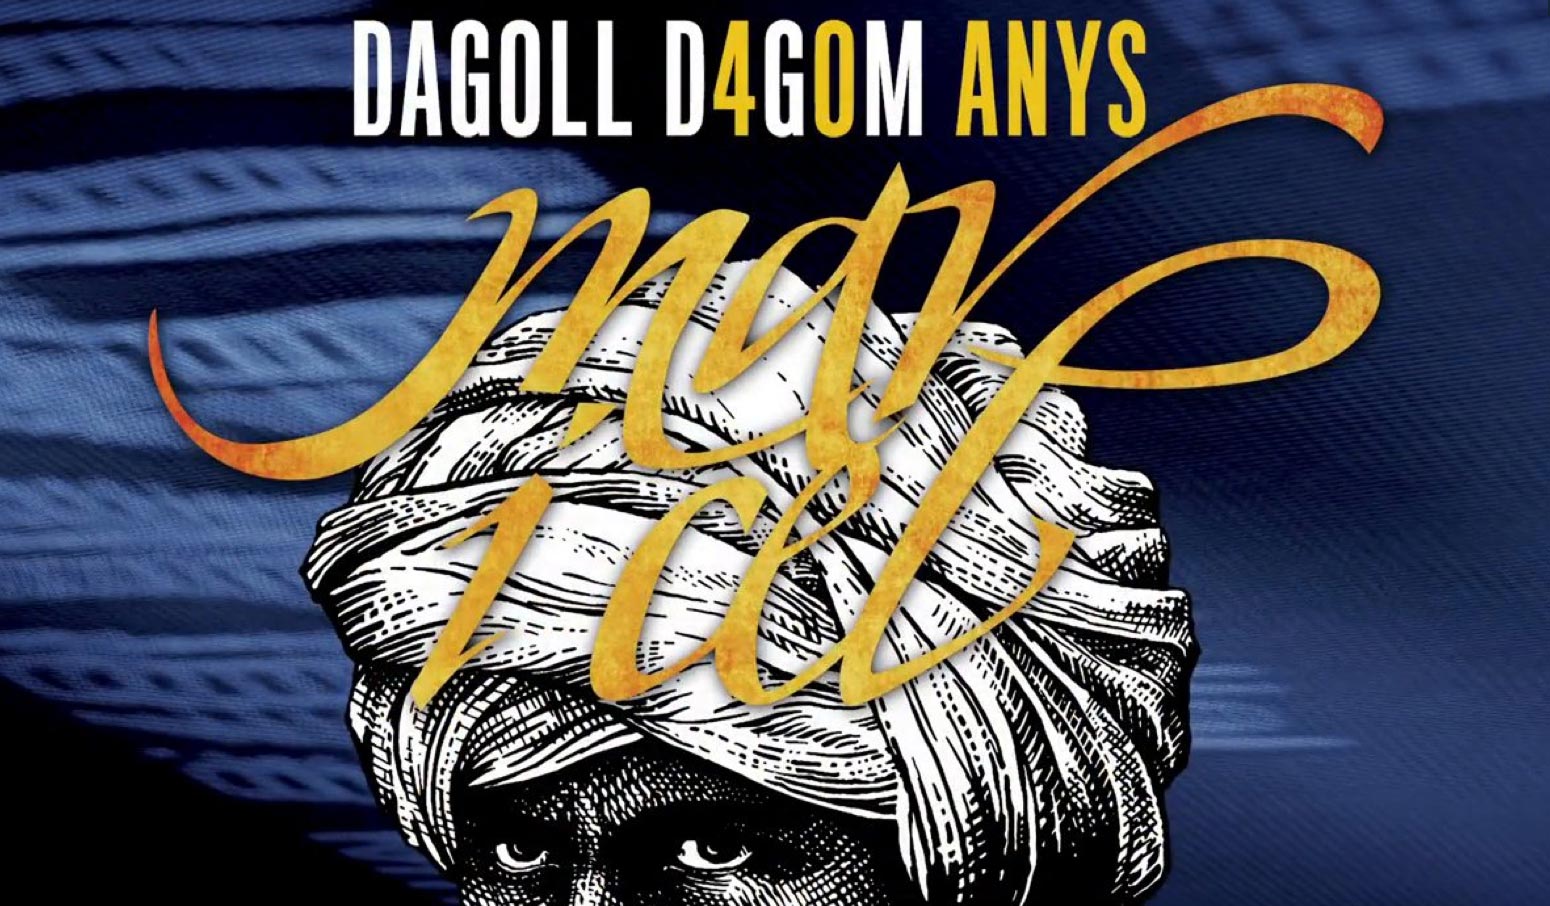 Dagoll Dagom Sea and Sky Poster